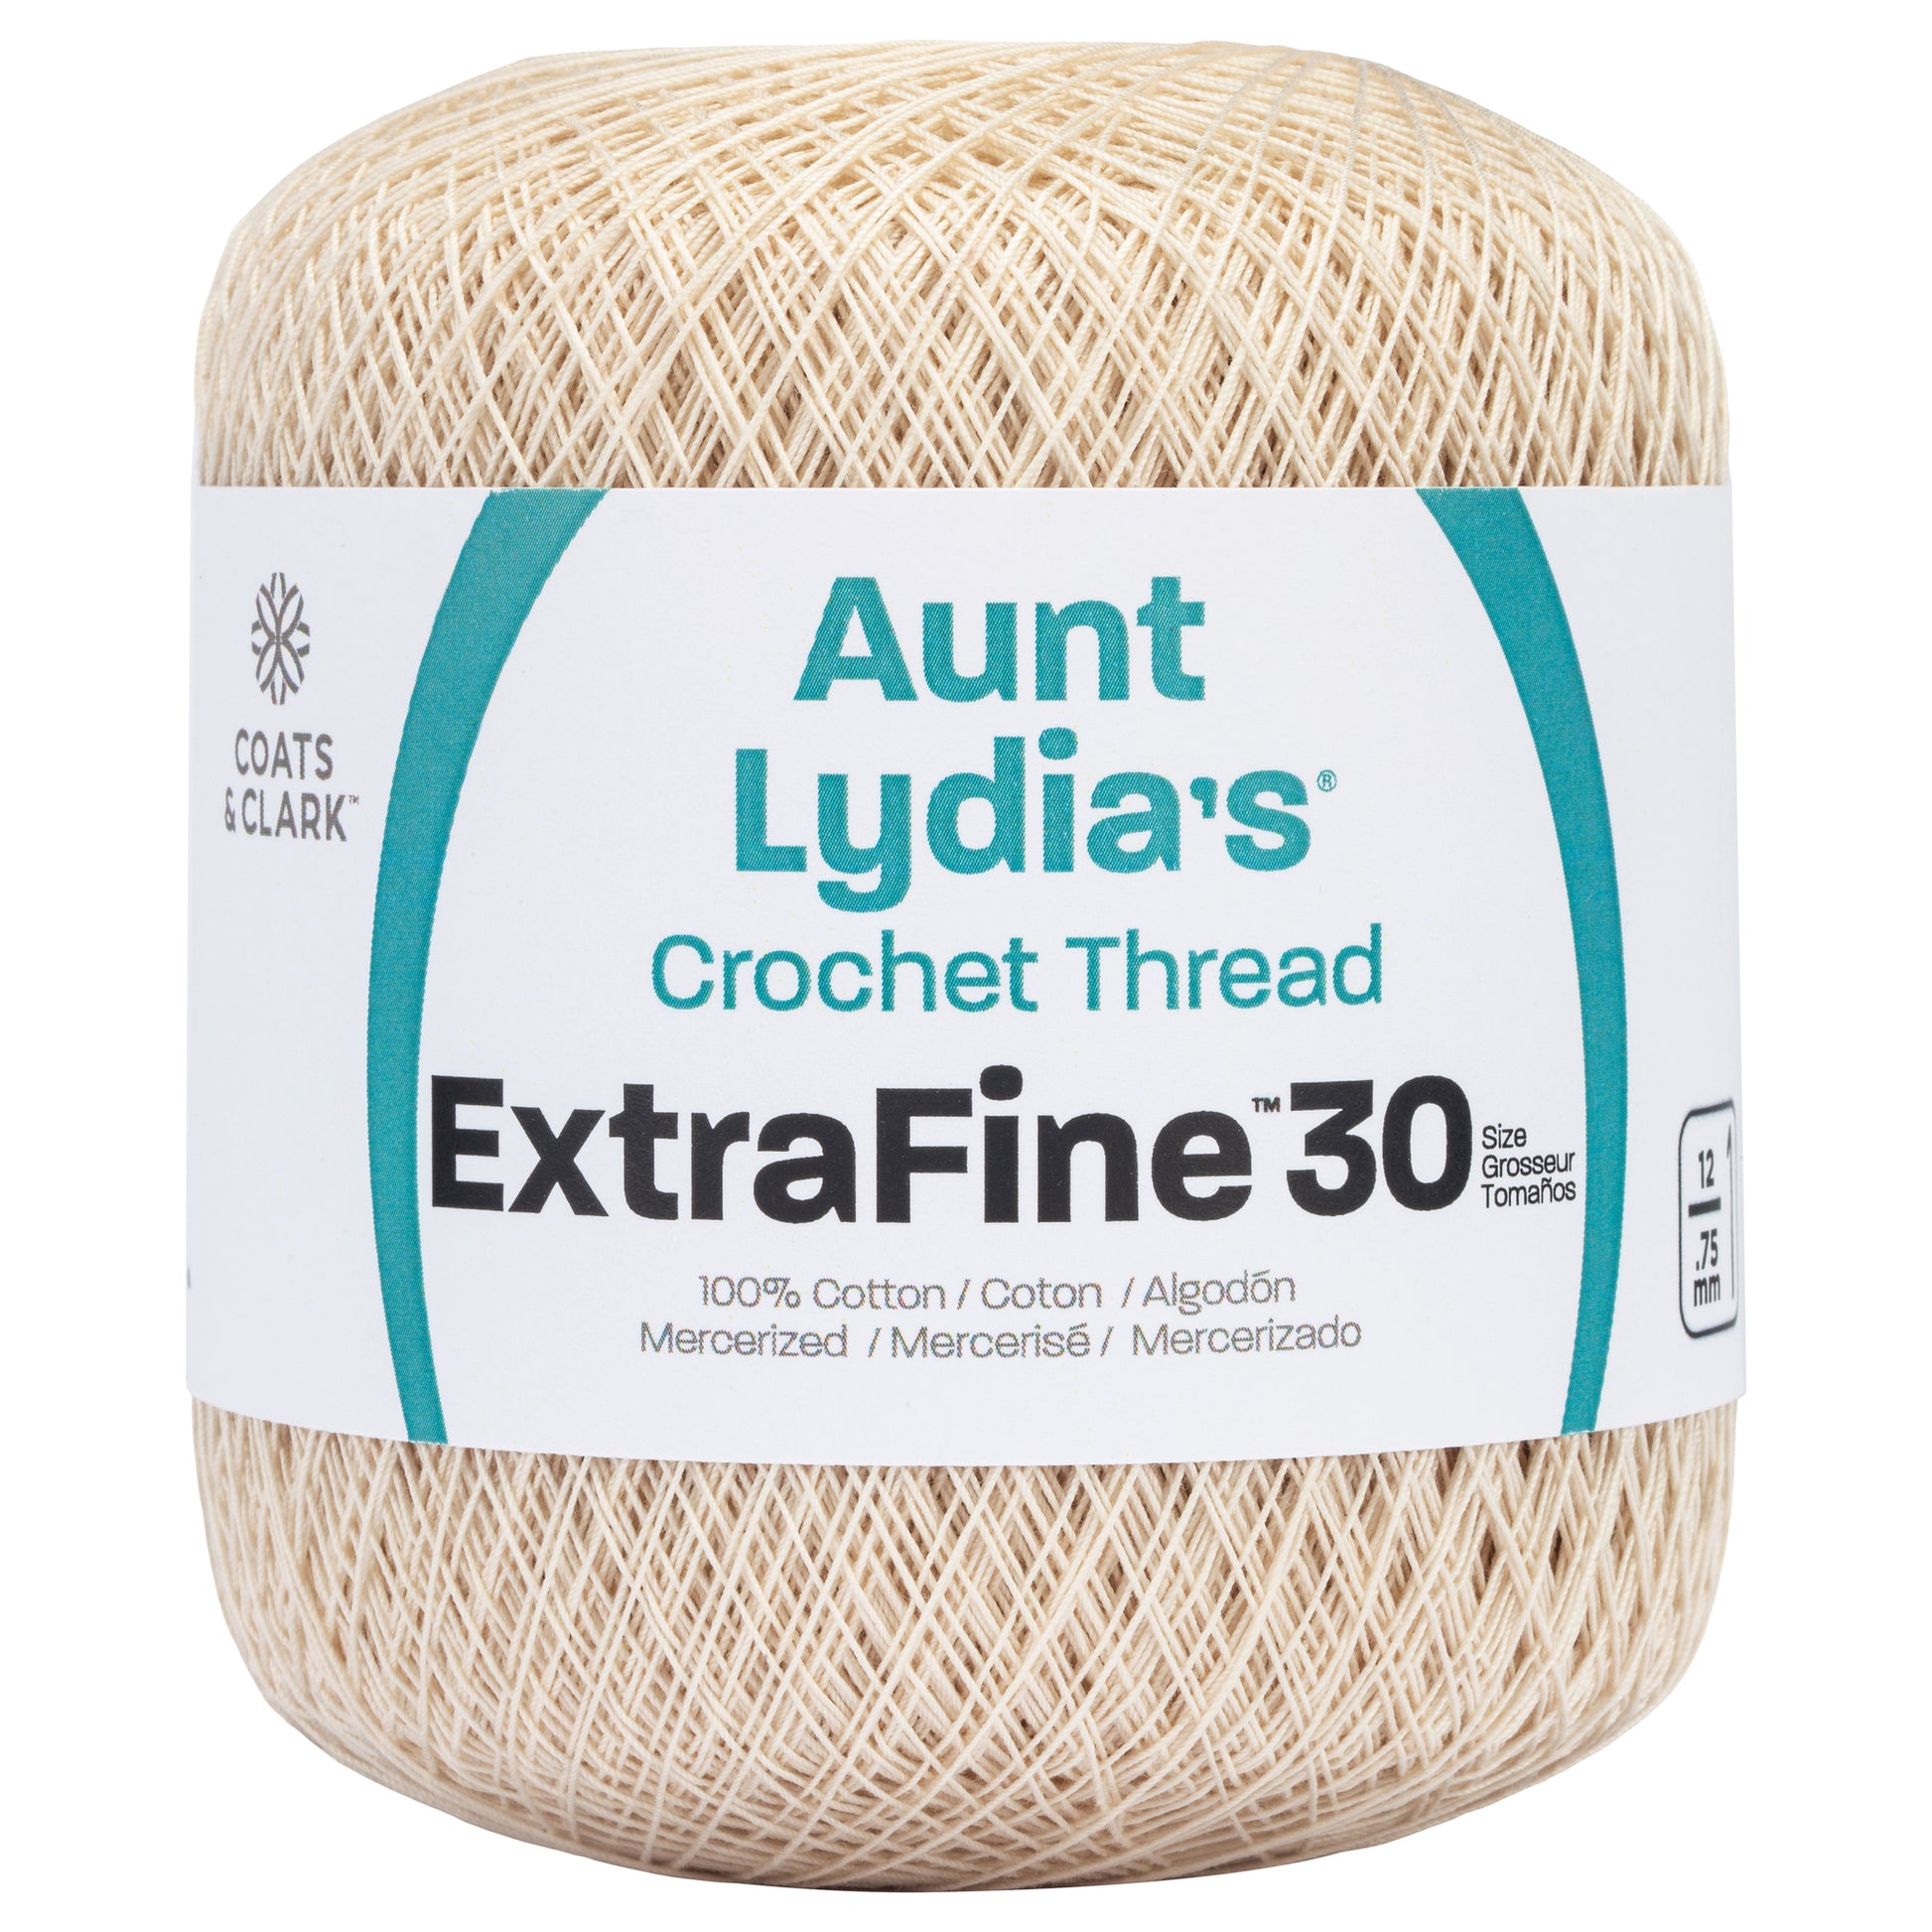 Aunt Lydia's Extra Fine Crochet Thread Size 30